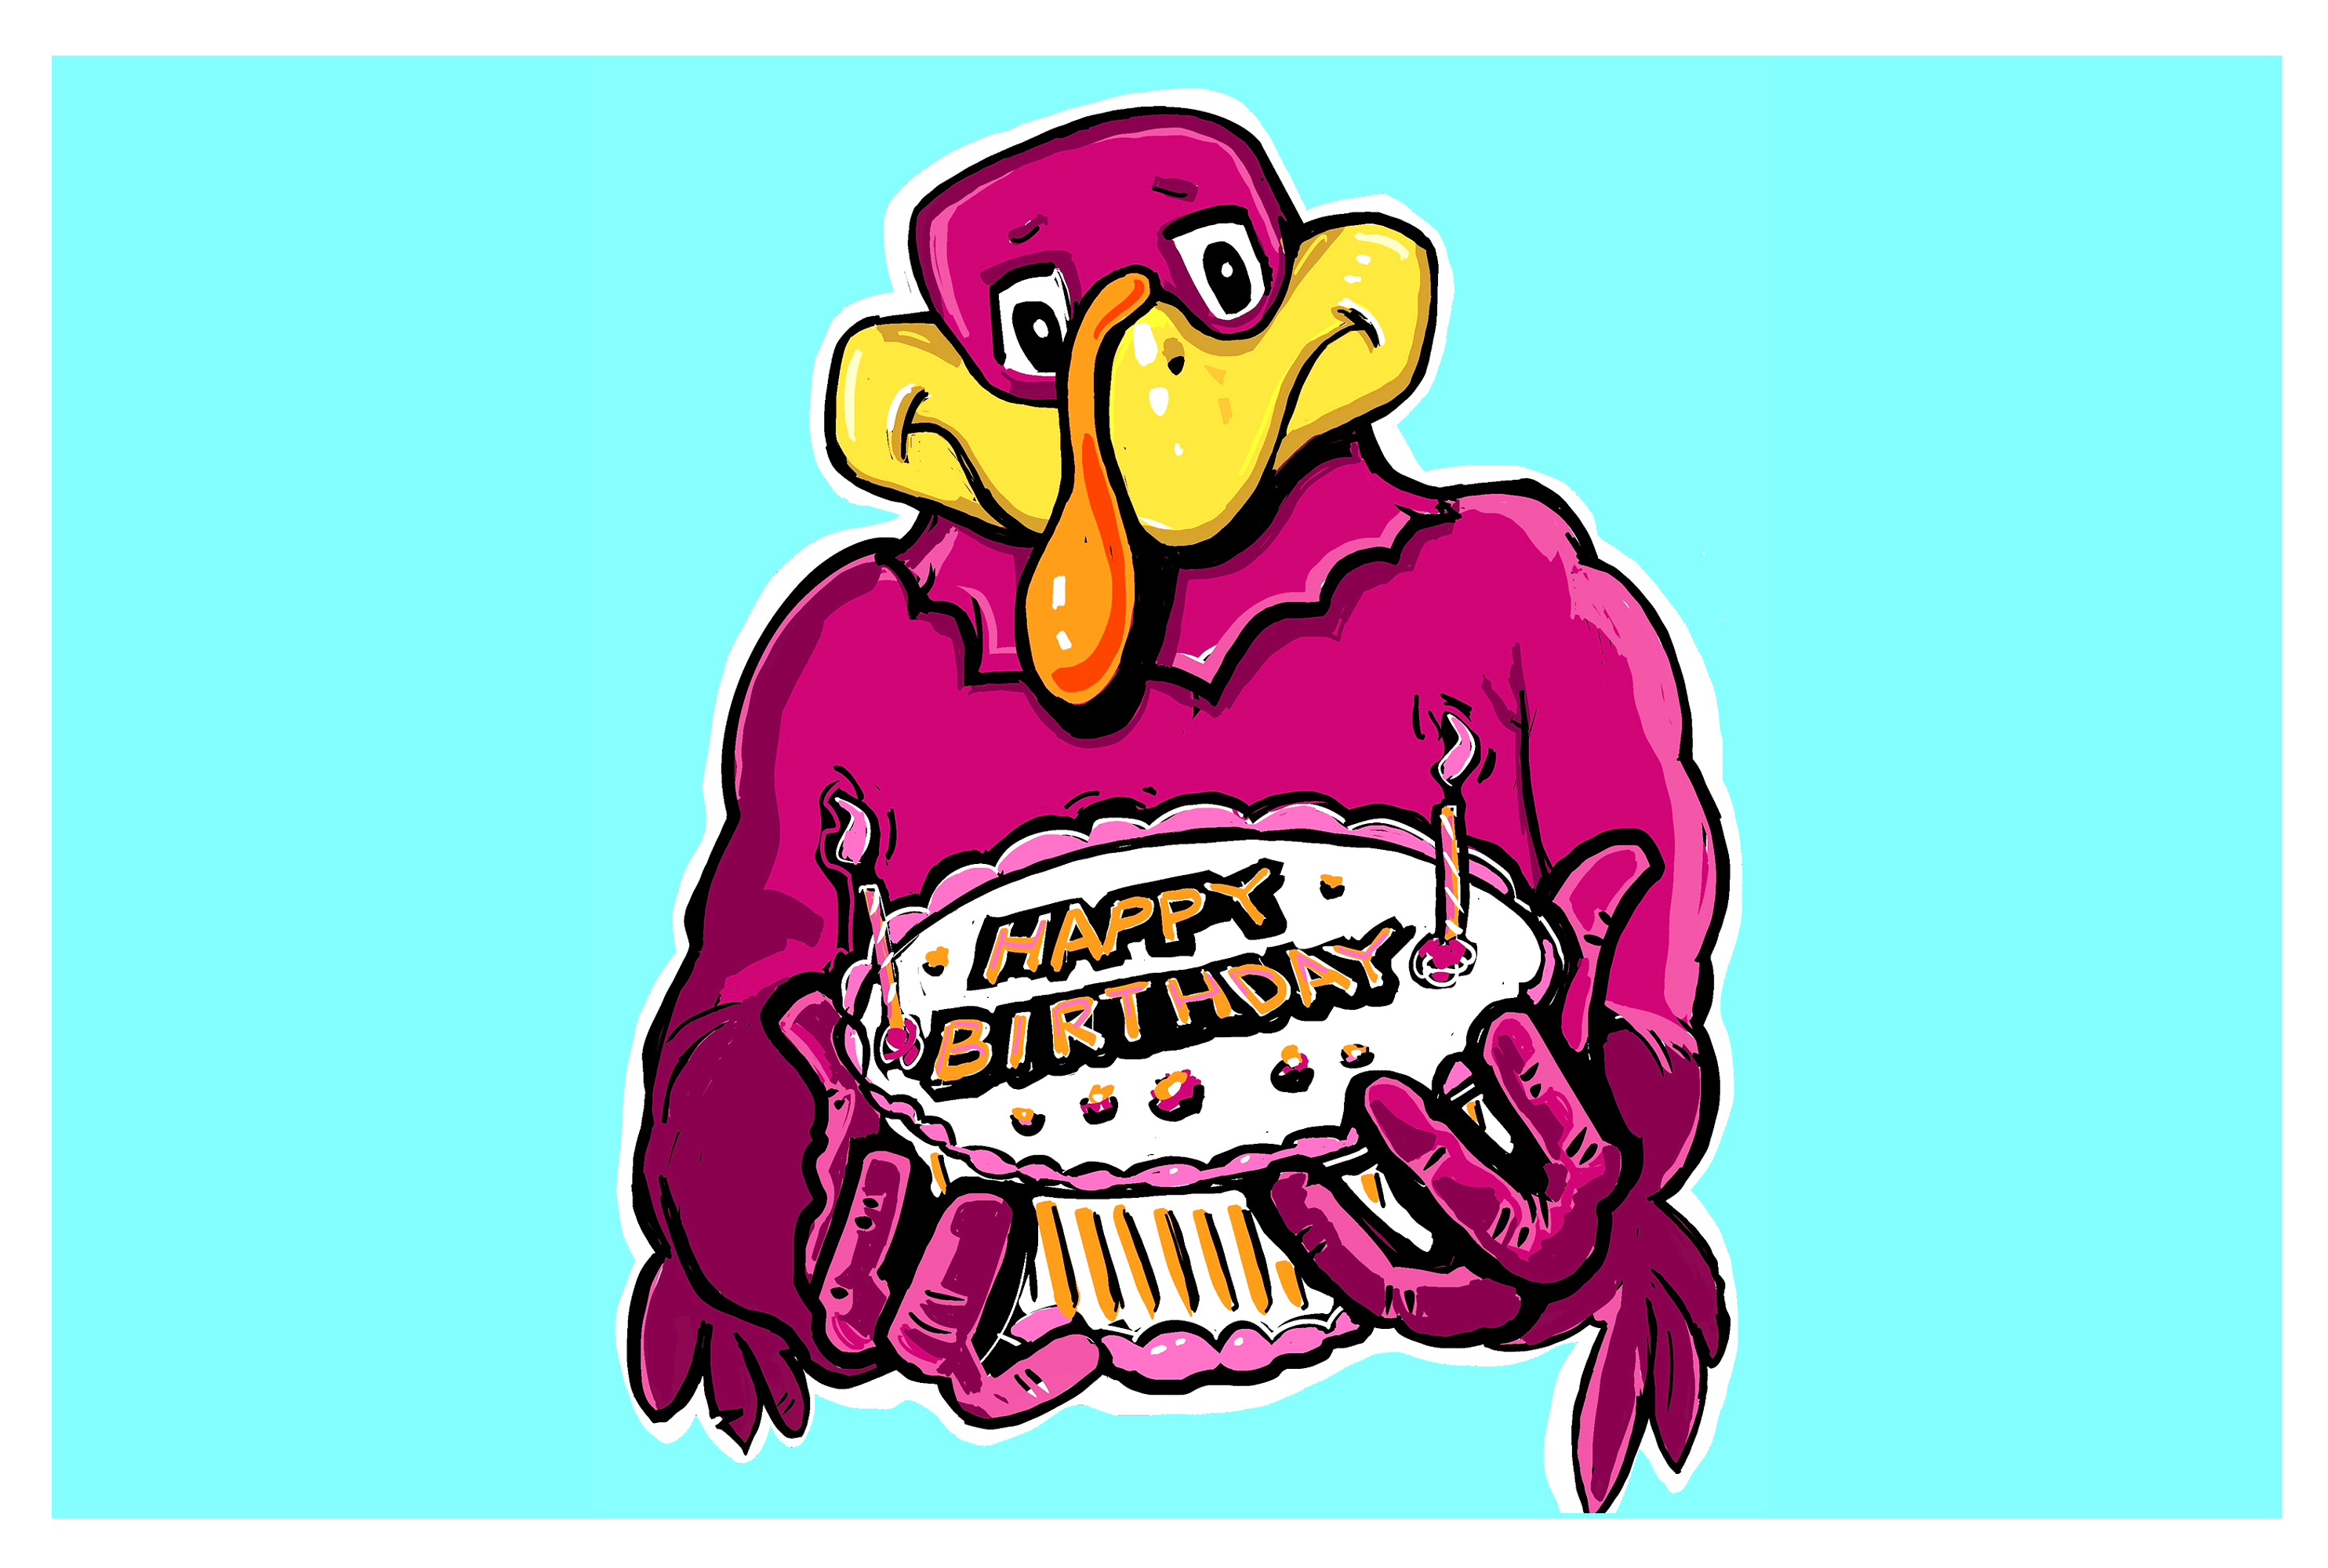 Digital sketch of the HokieBird holding a birthday cake